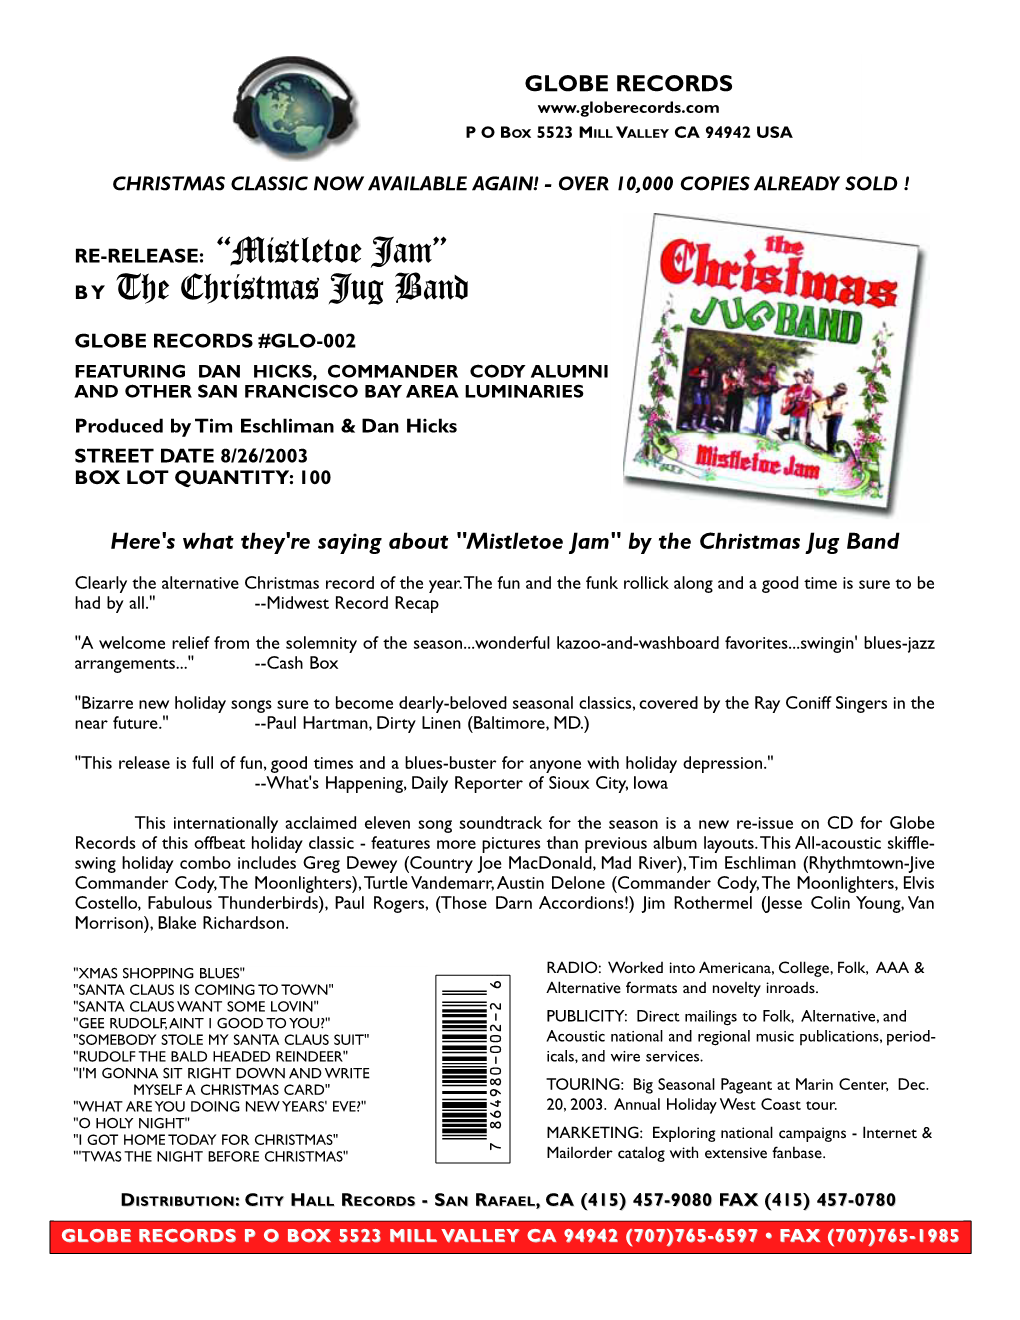 RE-RELEASE: “Mistletoe Jam” B Y the Christmas Jug Band